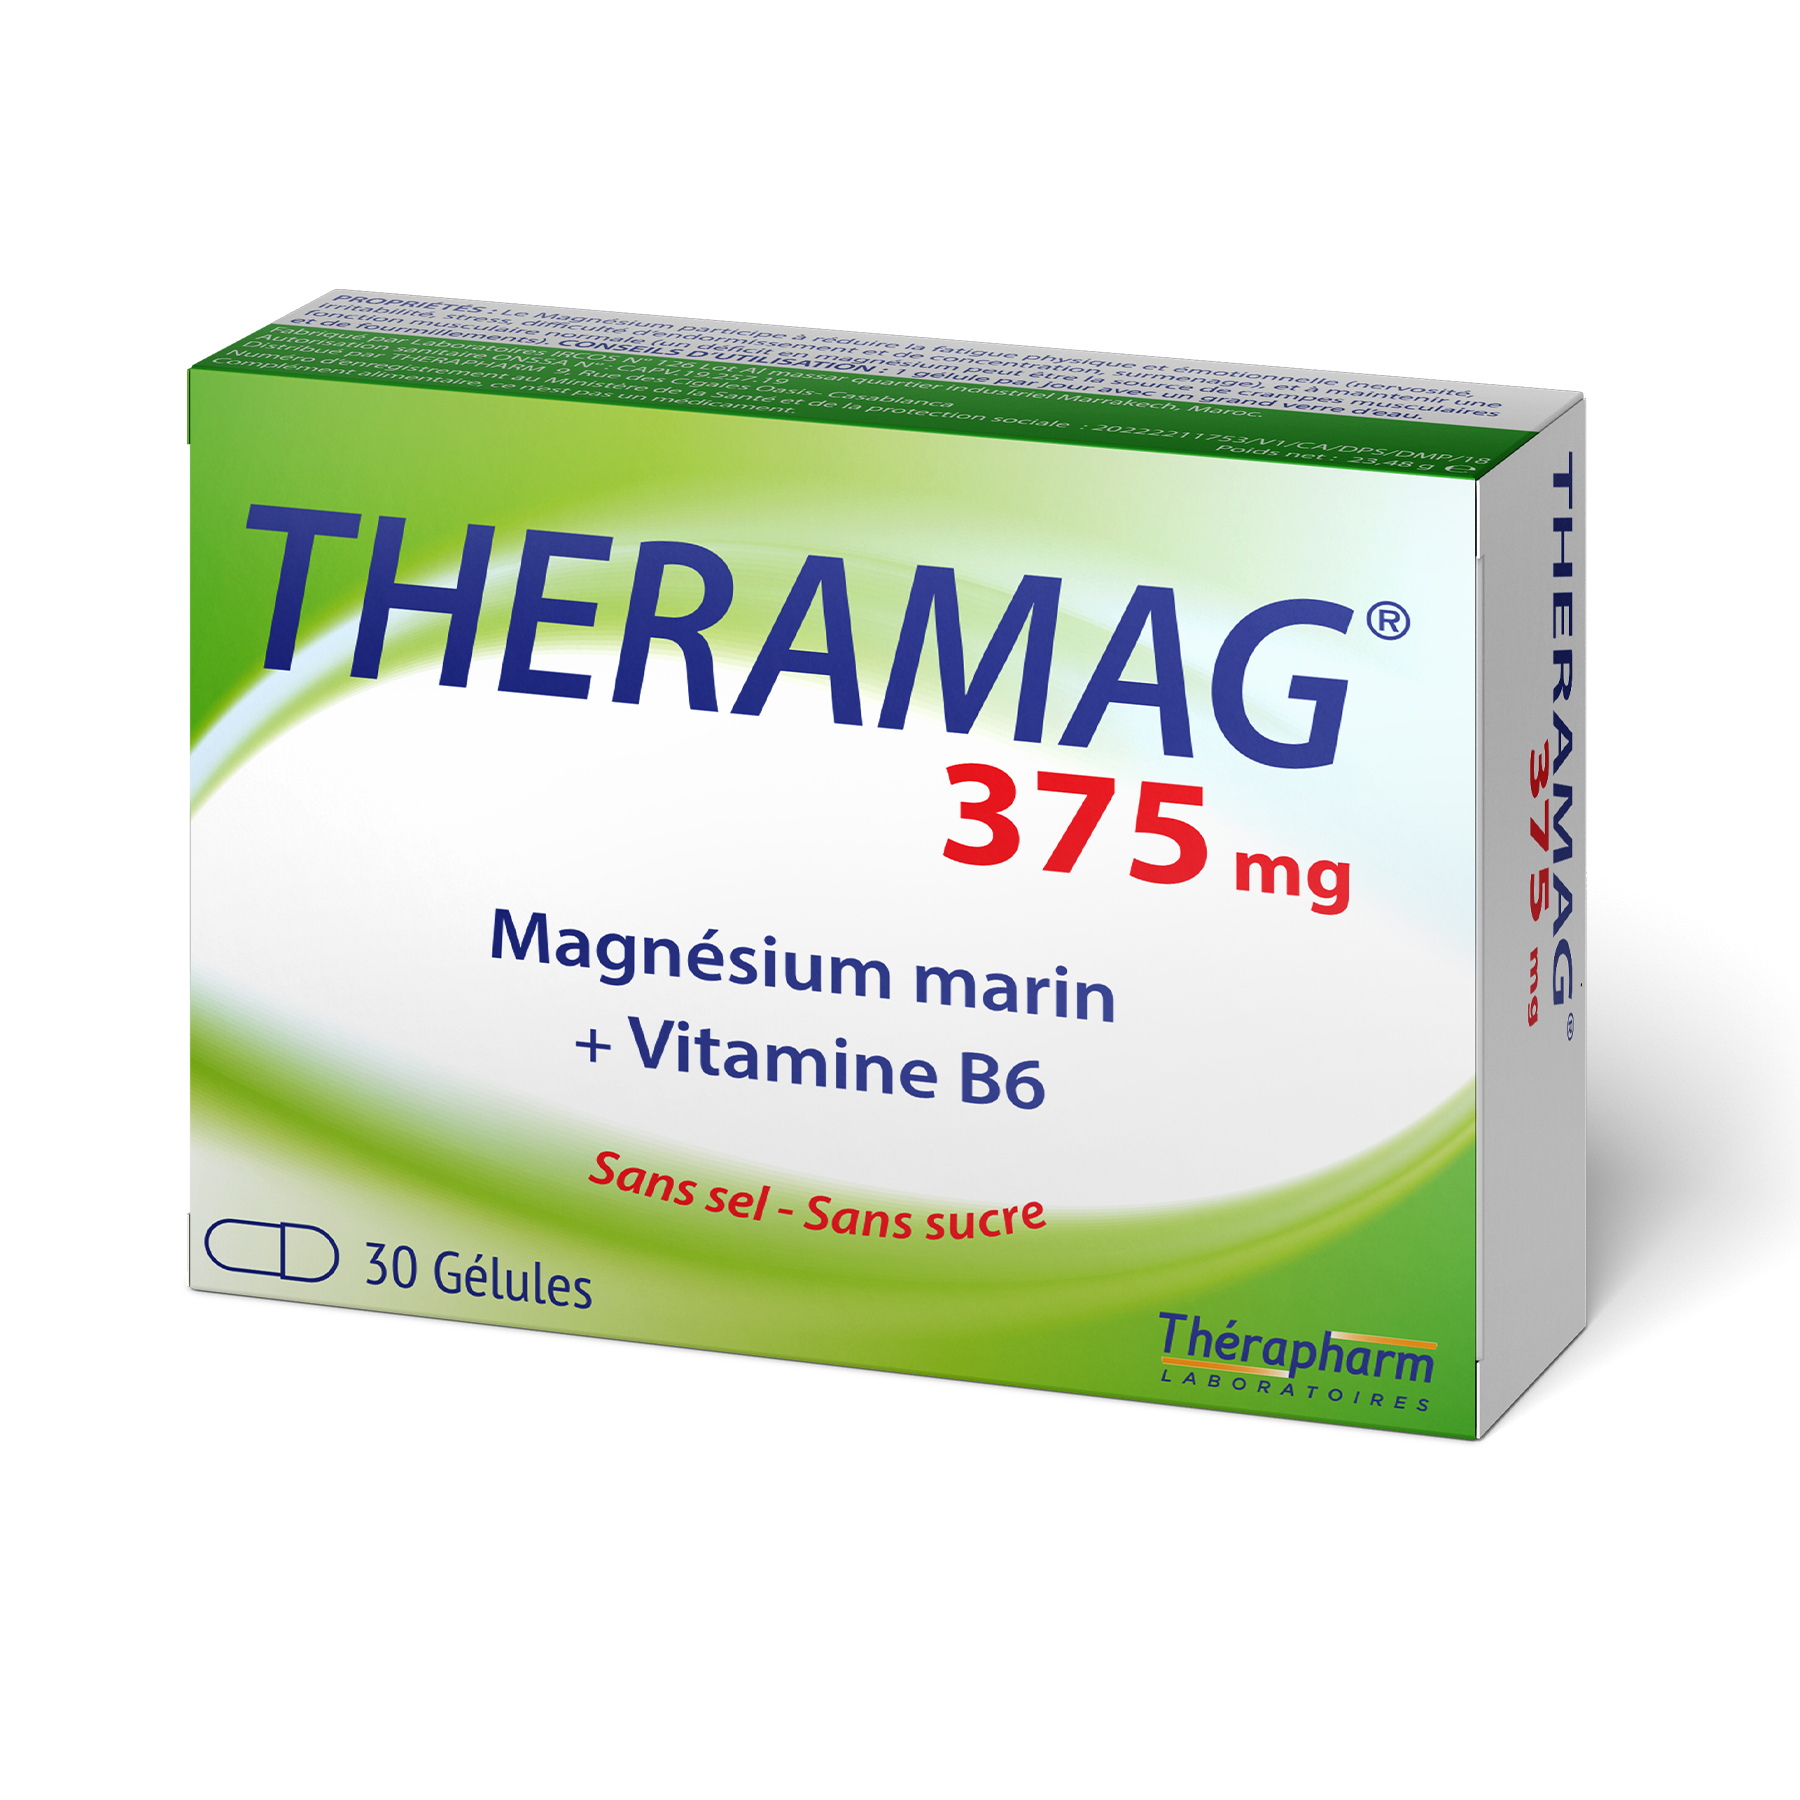 THERAMAG® 375mg